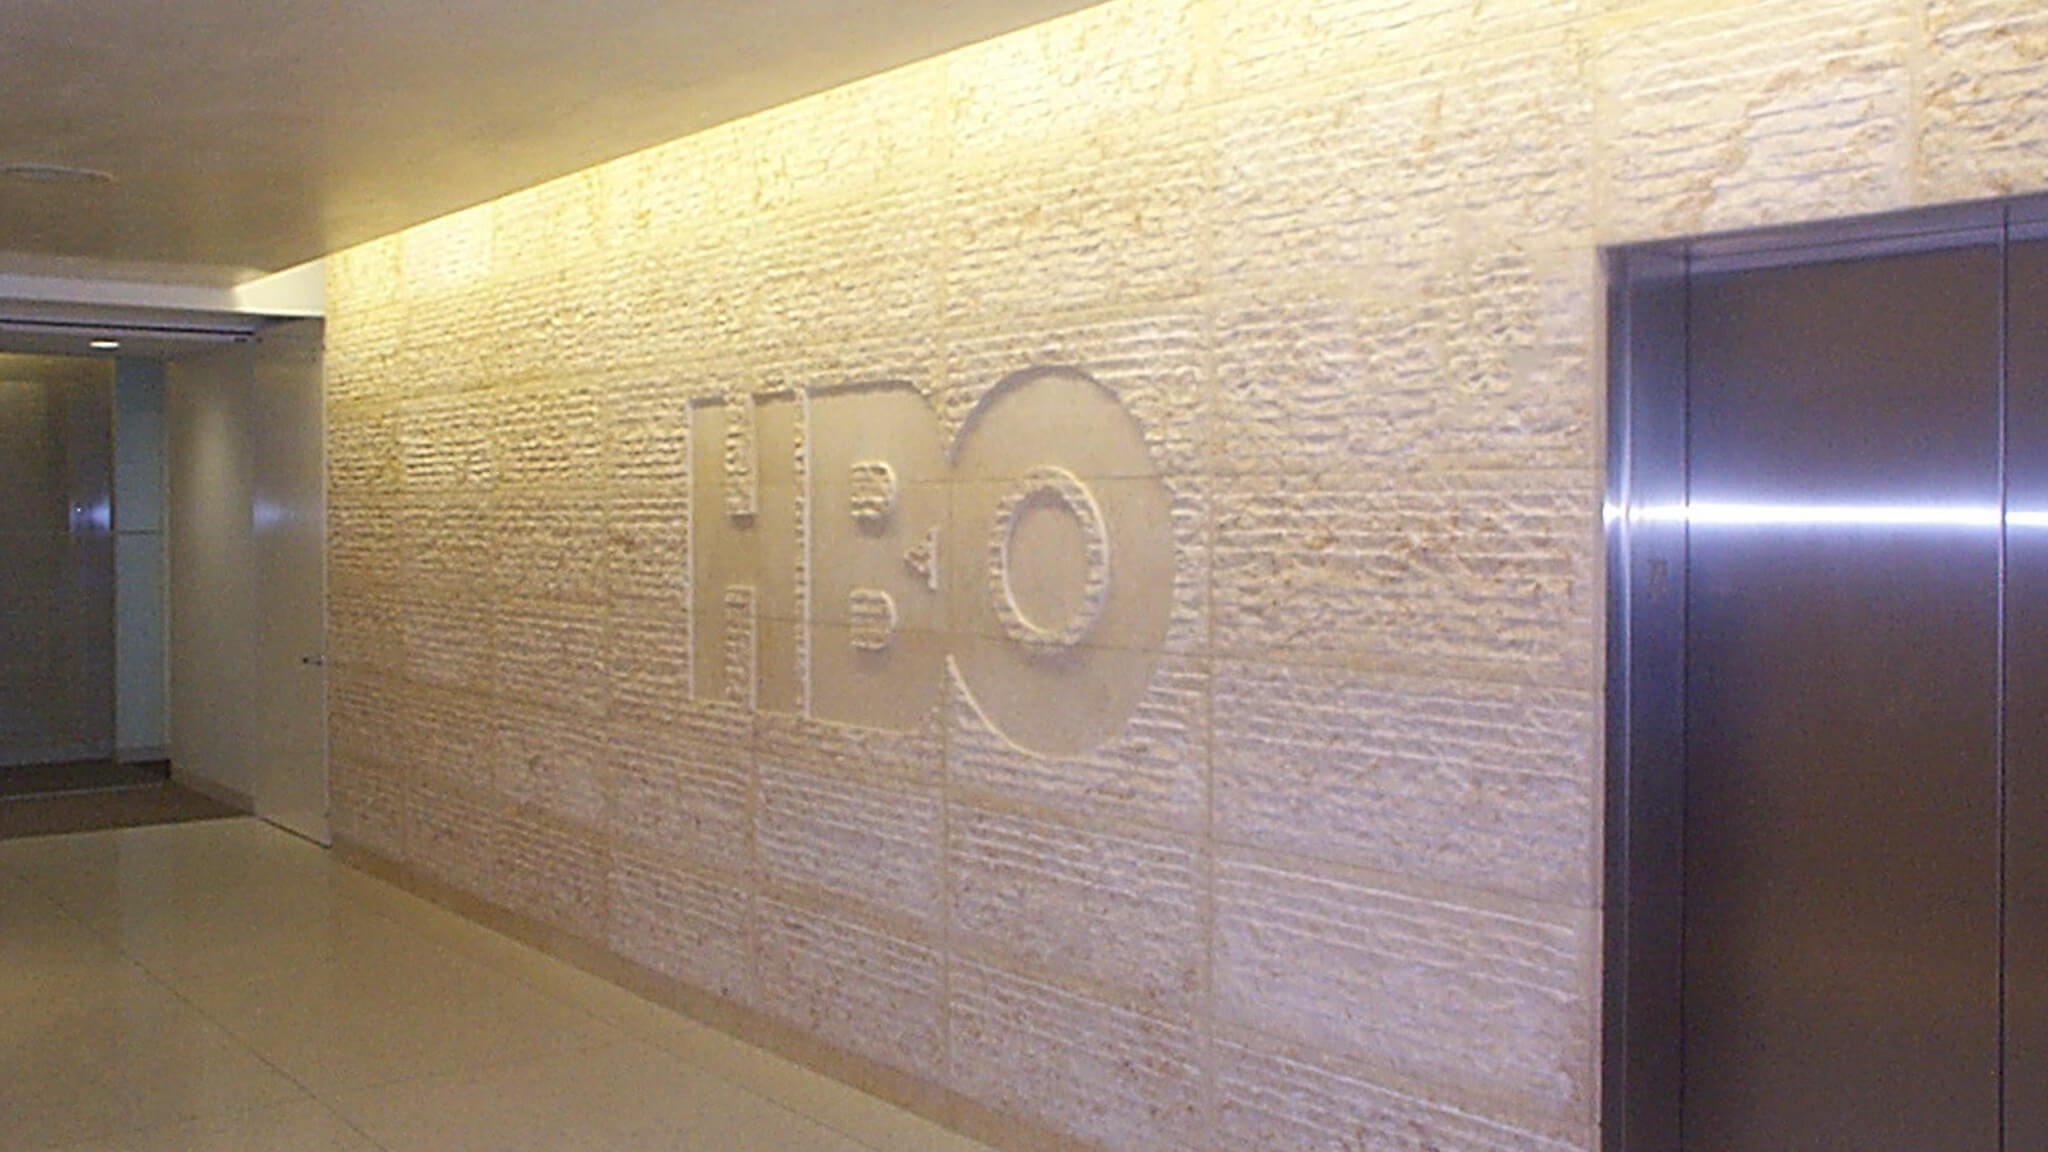 HBO Headquarters. Santa Monica, CA (2006)